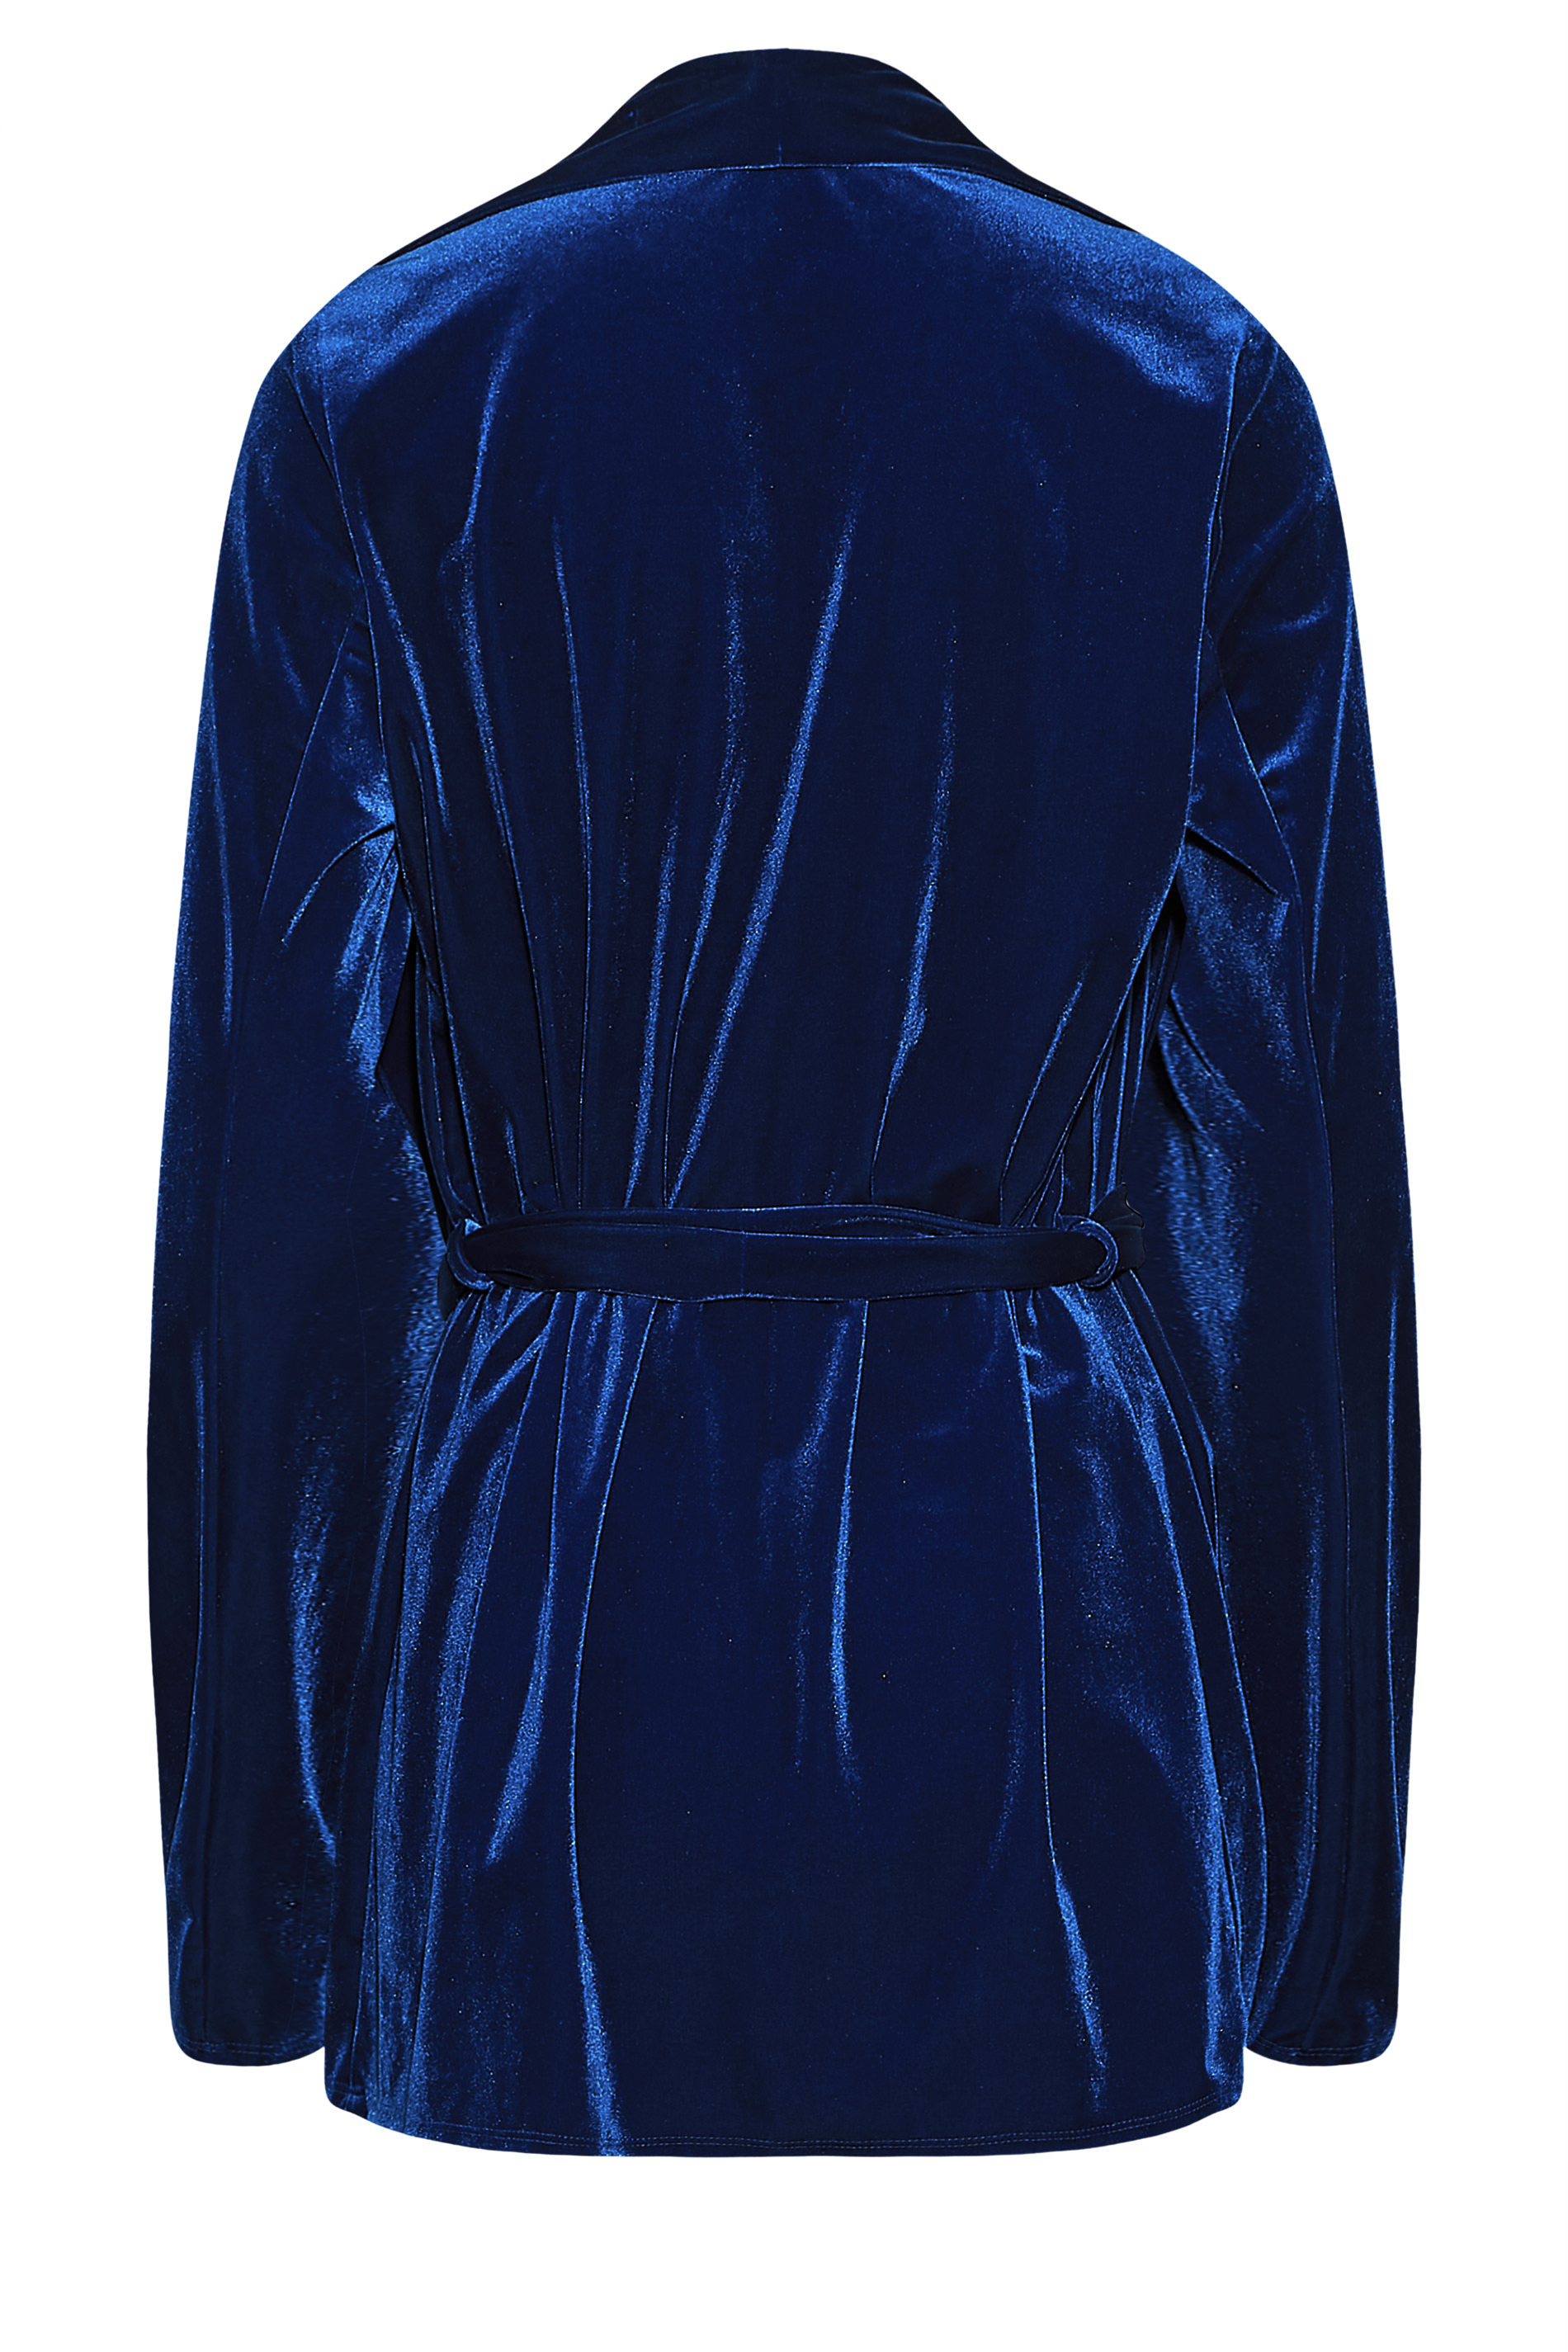 LTS Tall Women's Bright Blue Velvet Belted Blazer | Long Tall Sally 3